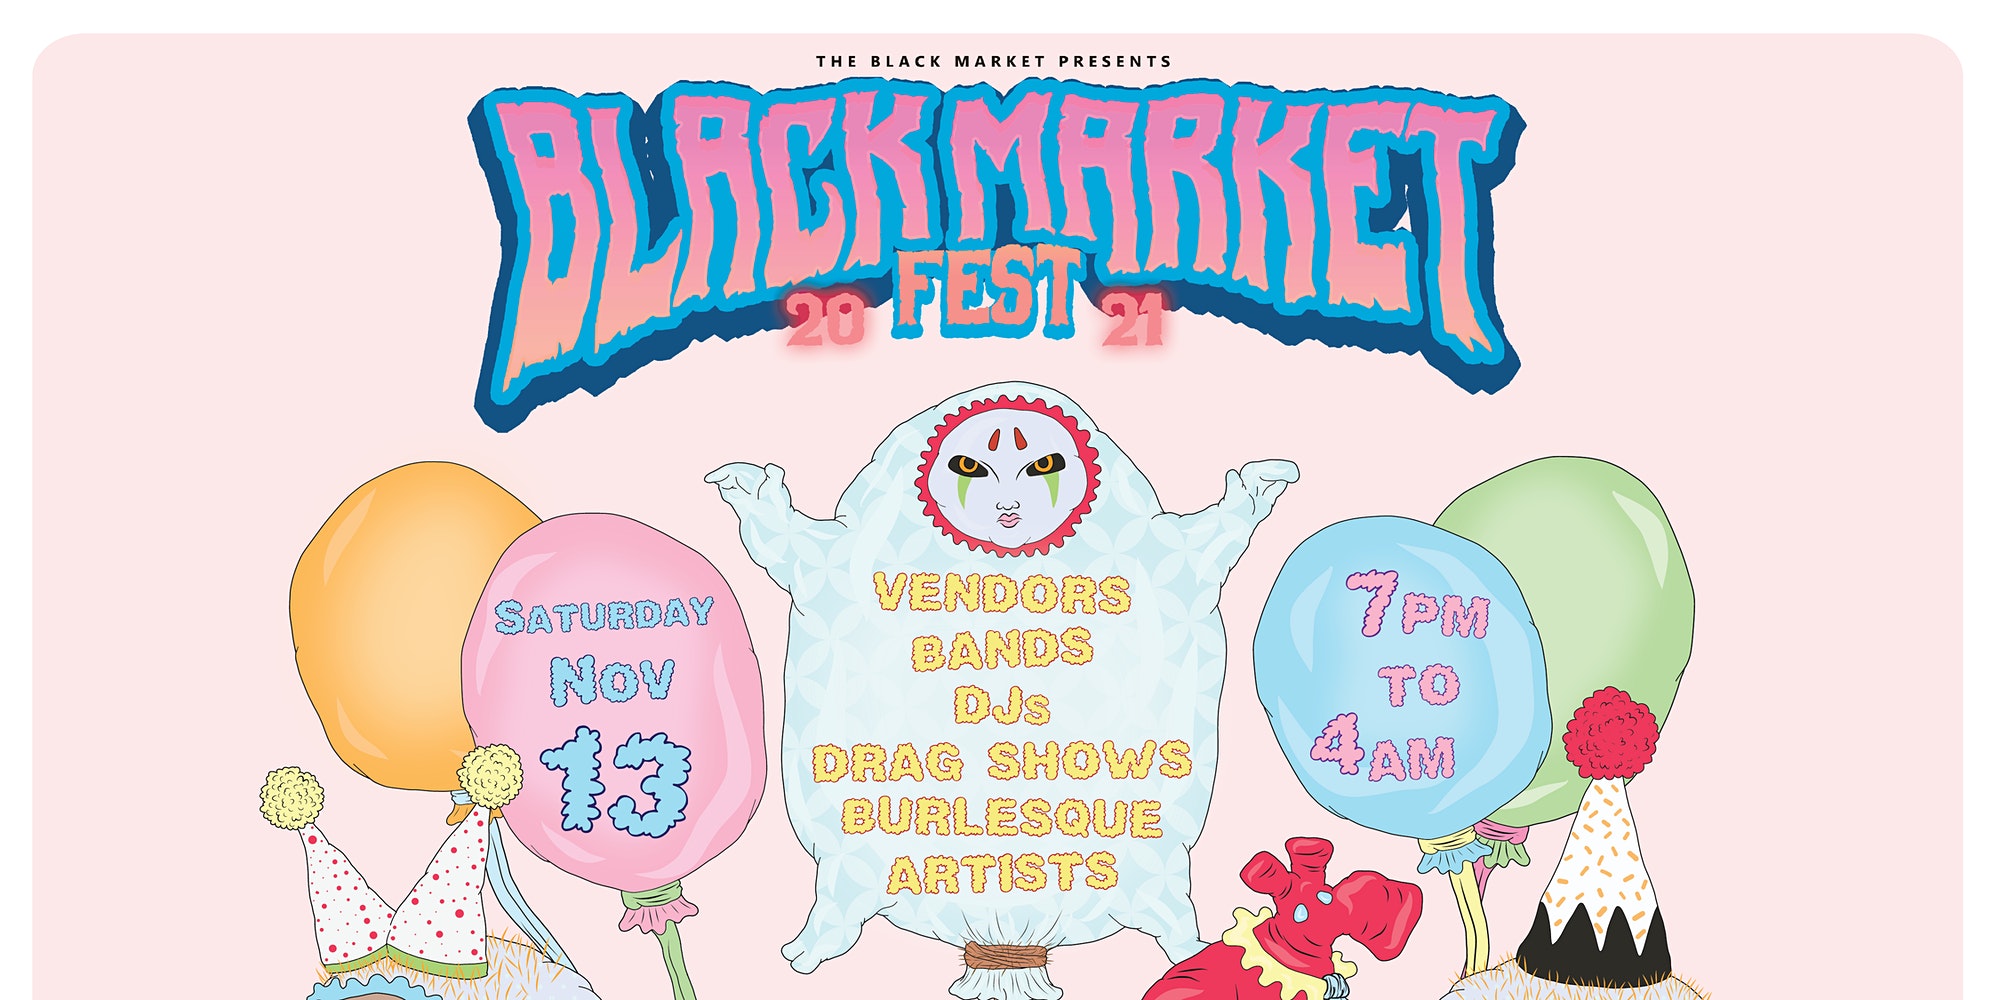 BLACK MARKET FEST 2021